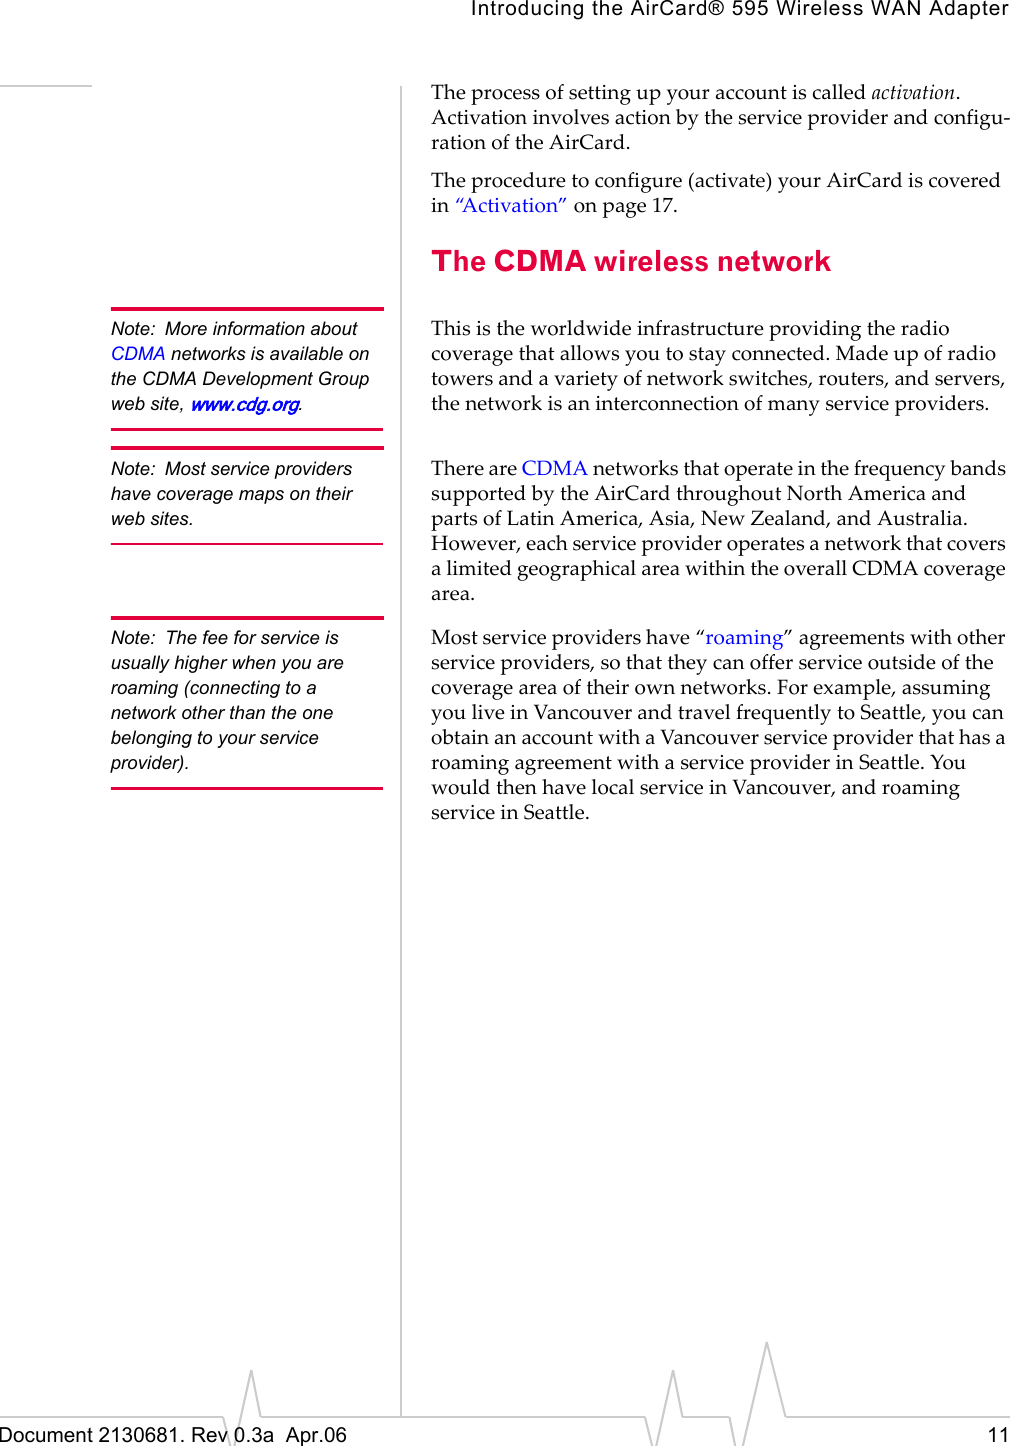 Introducing the AirCard® 595 Wireless WAN AdapterDocument 2130681. Rev 0.3a  Apr.06 11Theȱprocessȱofȱsettingȱupȱyourȱaccountȱisȱcalledȱactivation.ȱActivationȱinvolvesȱactionȱbyȱtheȱserviceȱproviderȱandȱconfiguȬrationȱofȱtheȱAirCard.Theȱprocedureȱtoȱconfigureȱ(activate)ȱyourȱAirCardȱisȱcoveredȱinȱ“Activation”ȱonȱpage 17.The CDMA wireless networkNote: More information about CDMA networks is available on the CDMA Development Group web site, www.cdg.org.Thisȱisȱtheȱworldwideȱinfrastructureȱprovidingȱtheȱradioȱcoverageȱthatȱallowsȱyouȱtoȱstayȱconnected.ȱMadeȱupȱofȱradioȱtowersȱandȱaȱvarietyȱofȱnetworkȱswitches,ȱrouters,ȱandȱservers,ȱtheȱnetworkȱisȱanȱinterconnectionȱofȱmanyȱserviceȱproviders.Note: Most service providers have coverage maps on their web sites. ThereȱareȱCDMAȱnetworksȱthatȱoperateȱinȱtheȱfrequencyȱbandsȱsupportedȱbyȱtheȱAirCardȱthroughoutȱNorthȱAmericaȱandȱpartsȱofȱLatinȱAmerica,ȱAsia,ȱNewȱZealand,ȱandȱAustralia.ȱHowever,ȱeachȱserviceȱproviderȱoperatesȱaȱnetworkȱthatȱcoversȱaȱlimitedȱgeographicalȱareaȱwithinȱtheȱoverallȱCDMAȱcoverageȱarea.Note: The fee for service is usually higher when you are roaming (connecting to a network other than the one belonging to your service provider).Mostȱserviceȱprovidersȱhaveȱ“roaming”ȱagreementsȱwithȱotherȱserviceȱproviders,ȱsoȱthatȱtheyȱcanȱofferȱserviceȱoutsideȱofȱtheȱcoverageȱareaȱofȱtheirȱownȱnetworks.ȱForȱexample,ȱassumingȱyouȱliveȱinȱVancouverȱandȱtravelȱfrequentlyȱtoȱSeattle,ȱyouȱcanȱobtainȱanȱaccountȱwithȱaȱVancouverȱserviceȱproviderȱthatȱhasȱaȱroamingȱagreementȱwithȱaȱserviceȱproviderȱinȱSeattle.ȱYouȱwouldȱthenȱhaveȱlocalȱserviceȱinȱVancouver,ȱandȱroamingȱserviceȱinȱSeattle.